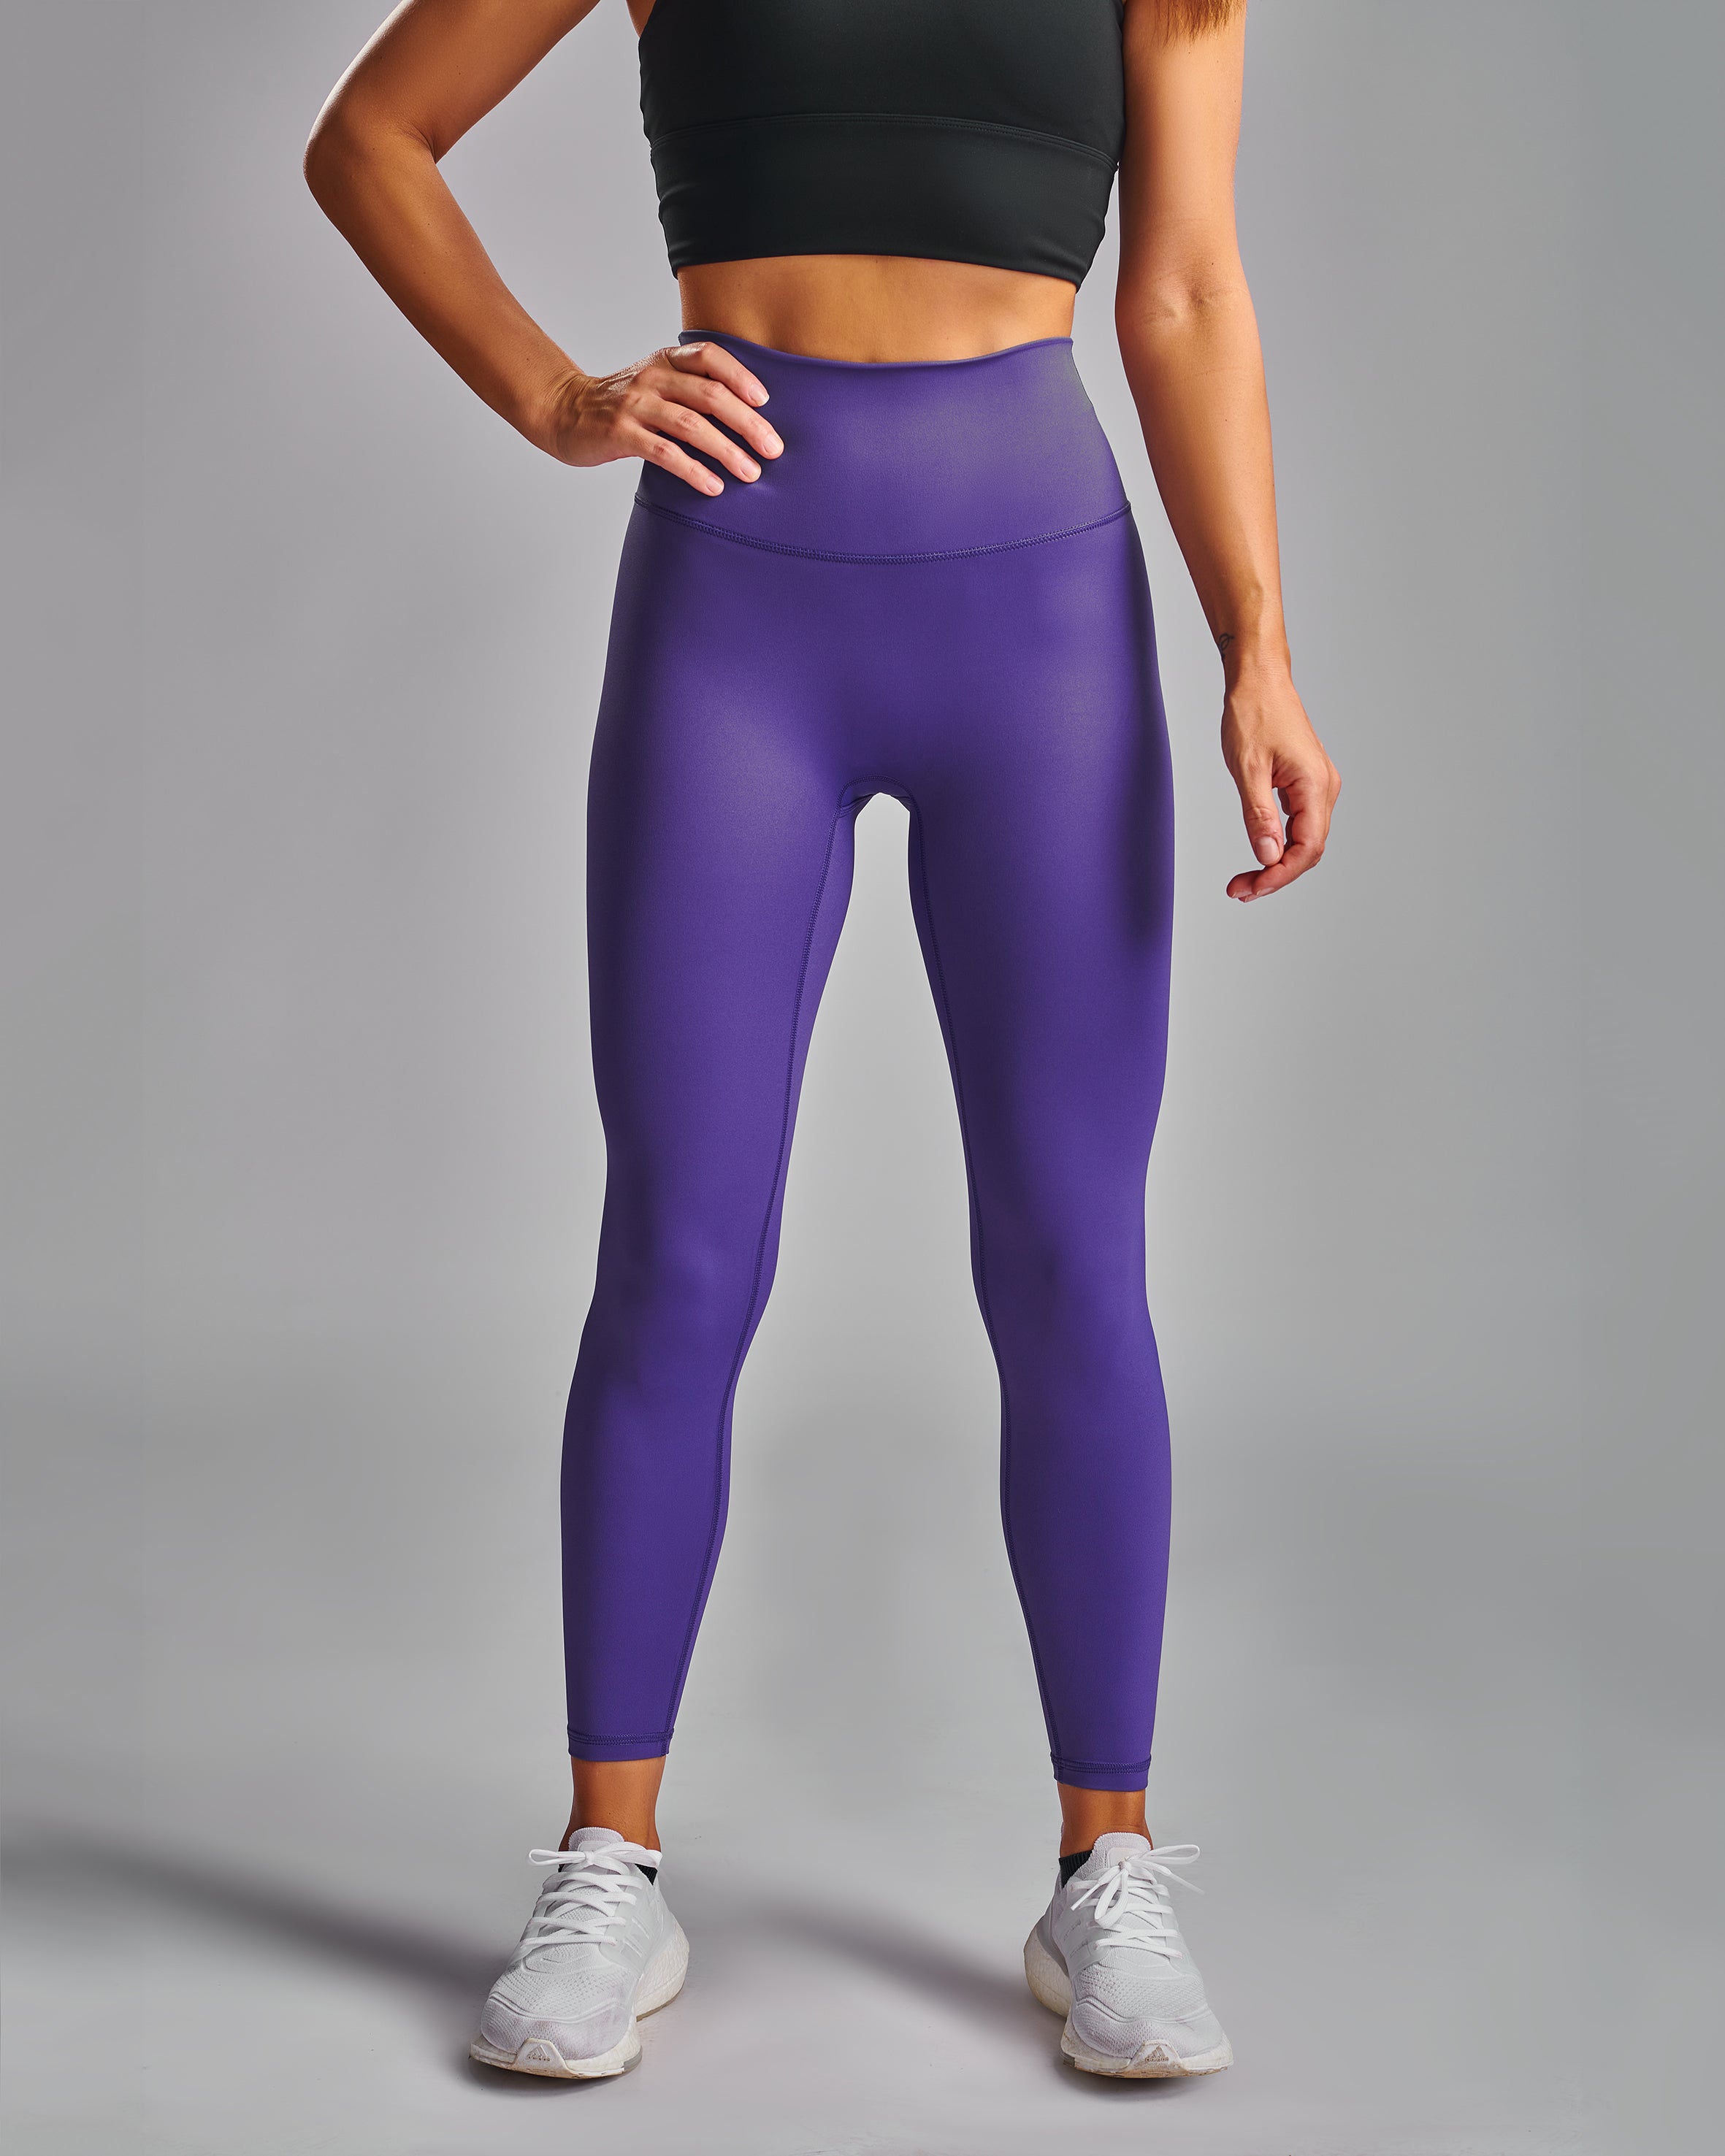 Ivivva By Lululemon Girls Leggings Size 14 Purple Floral Full Length  Activewear